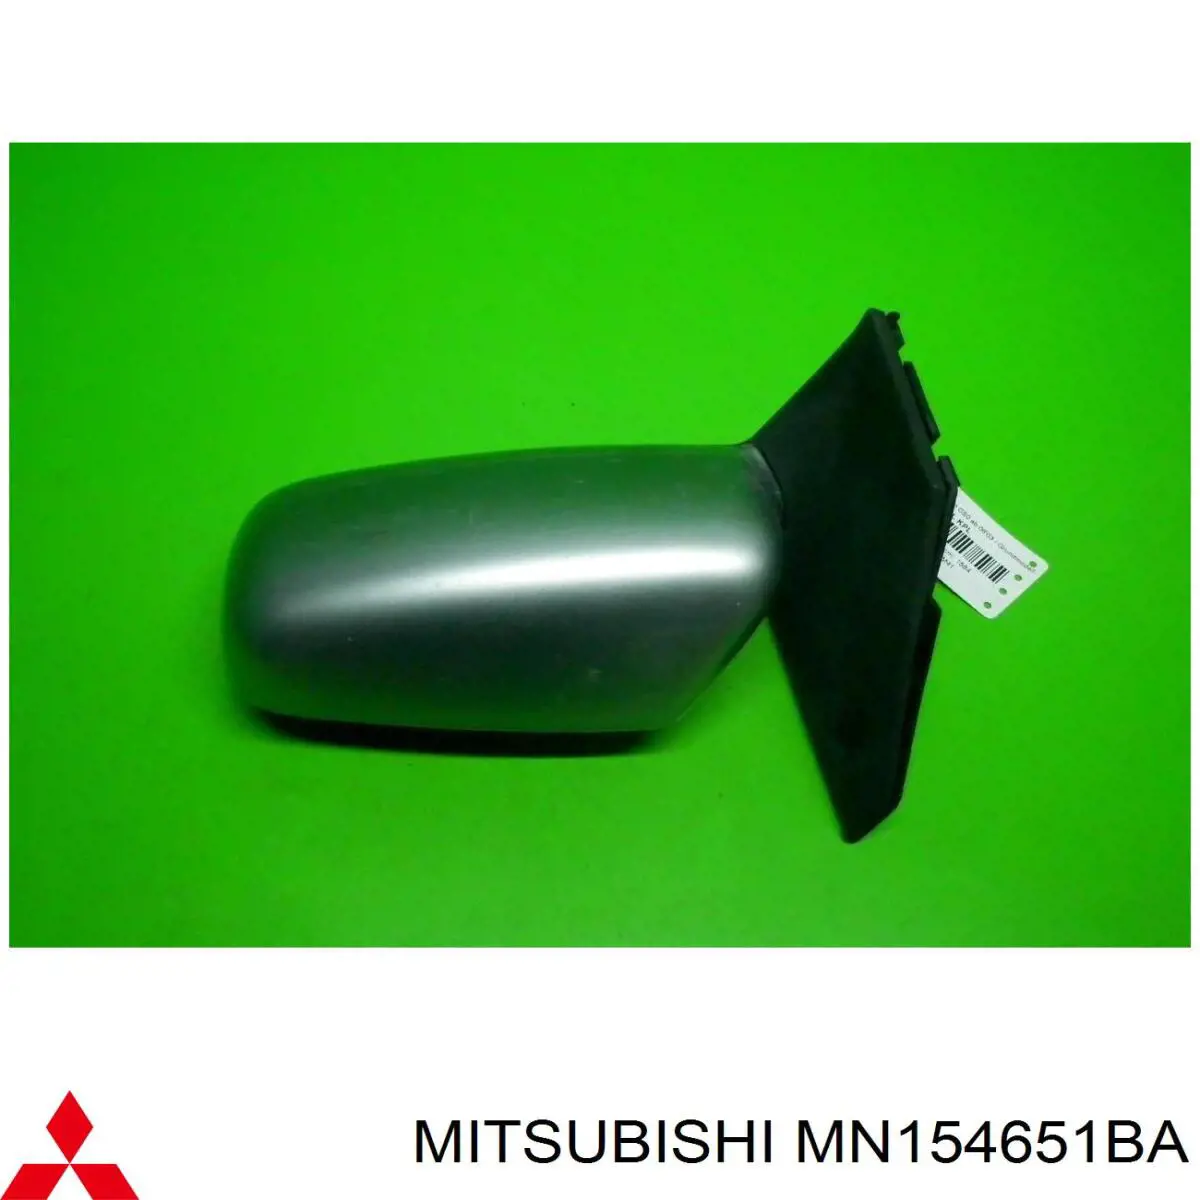 MN154651WA Mitsubishi espejo retrovisor izquierdo